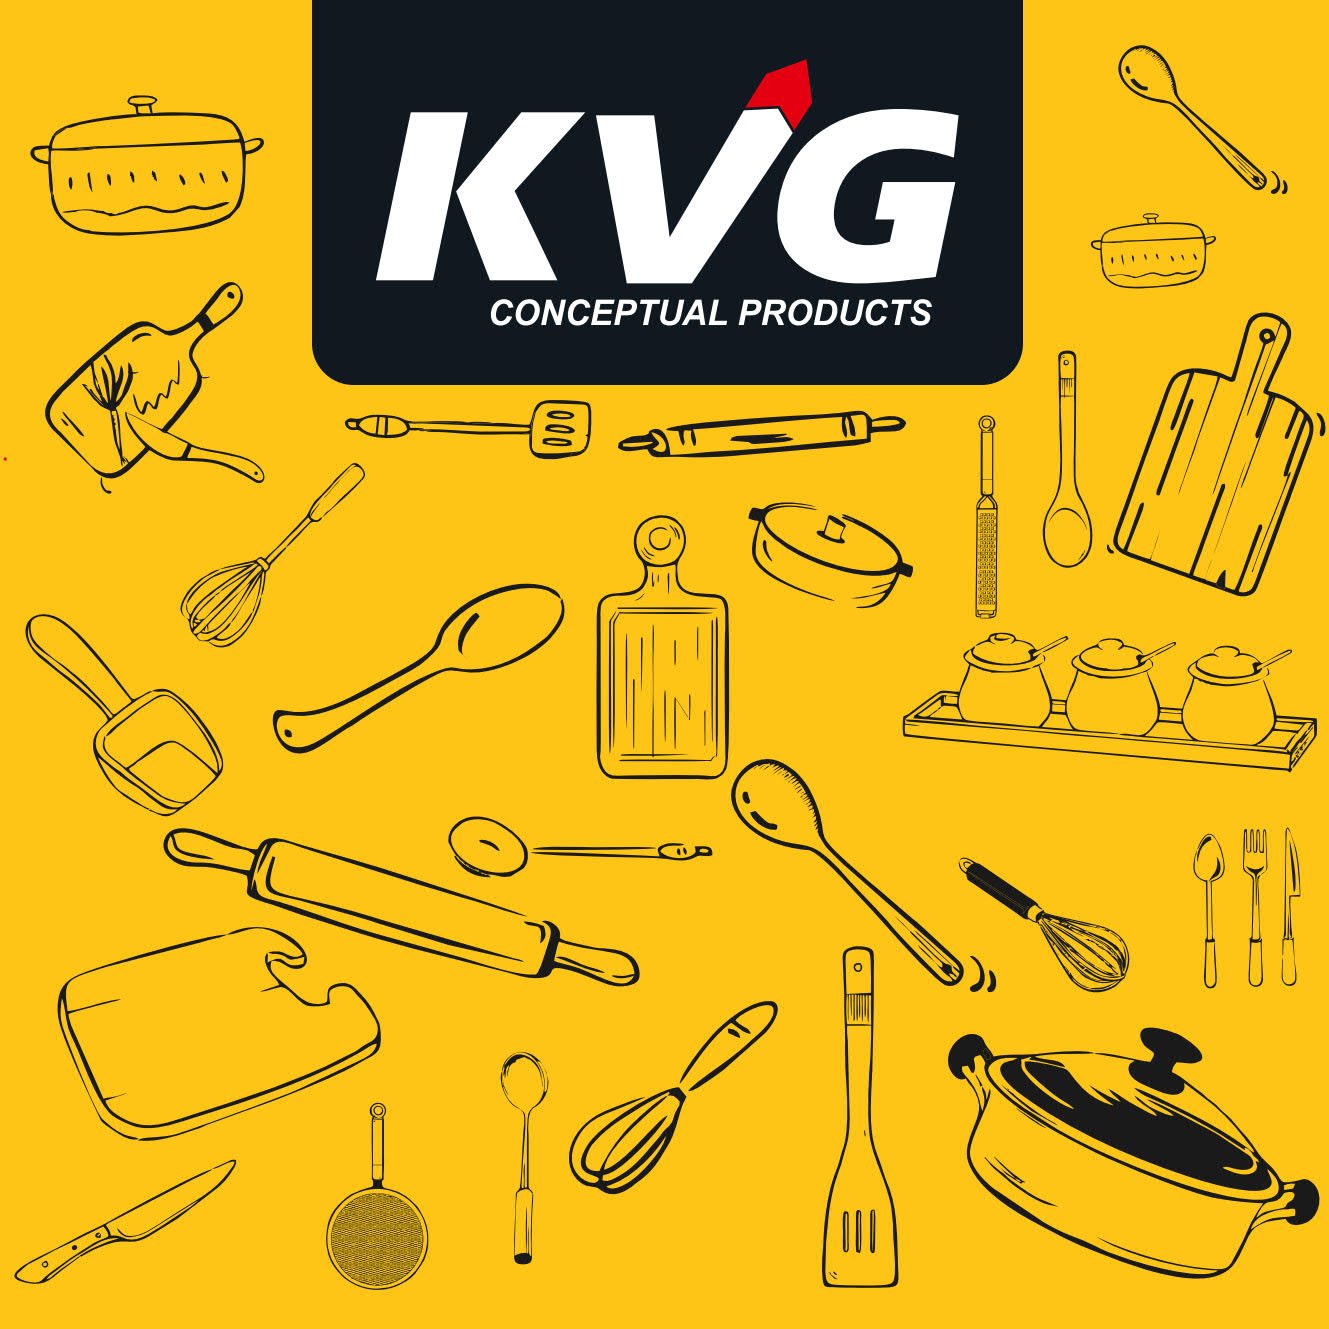 KVG CONCEPTUAL PRODUCTS